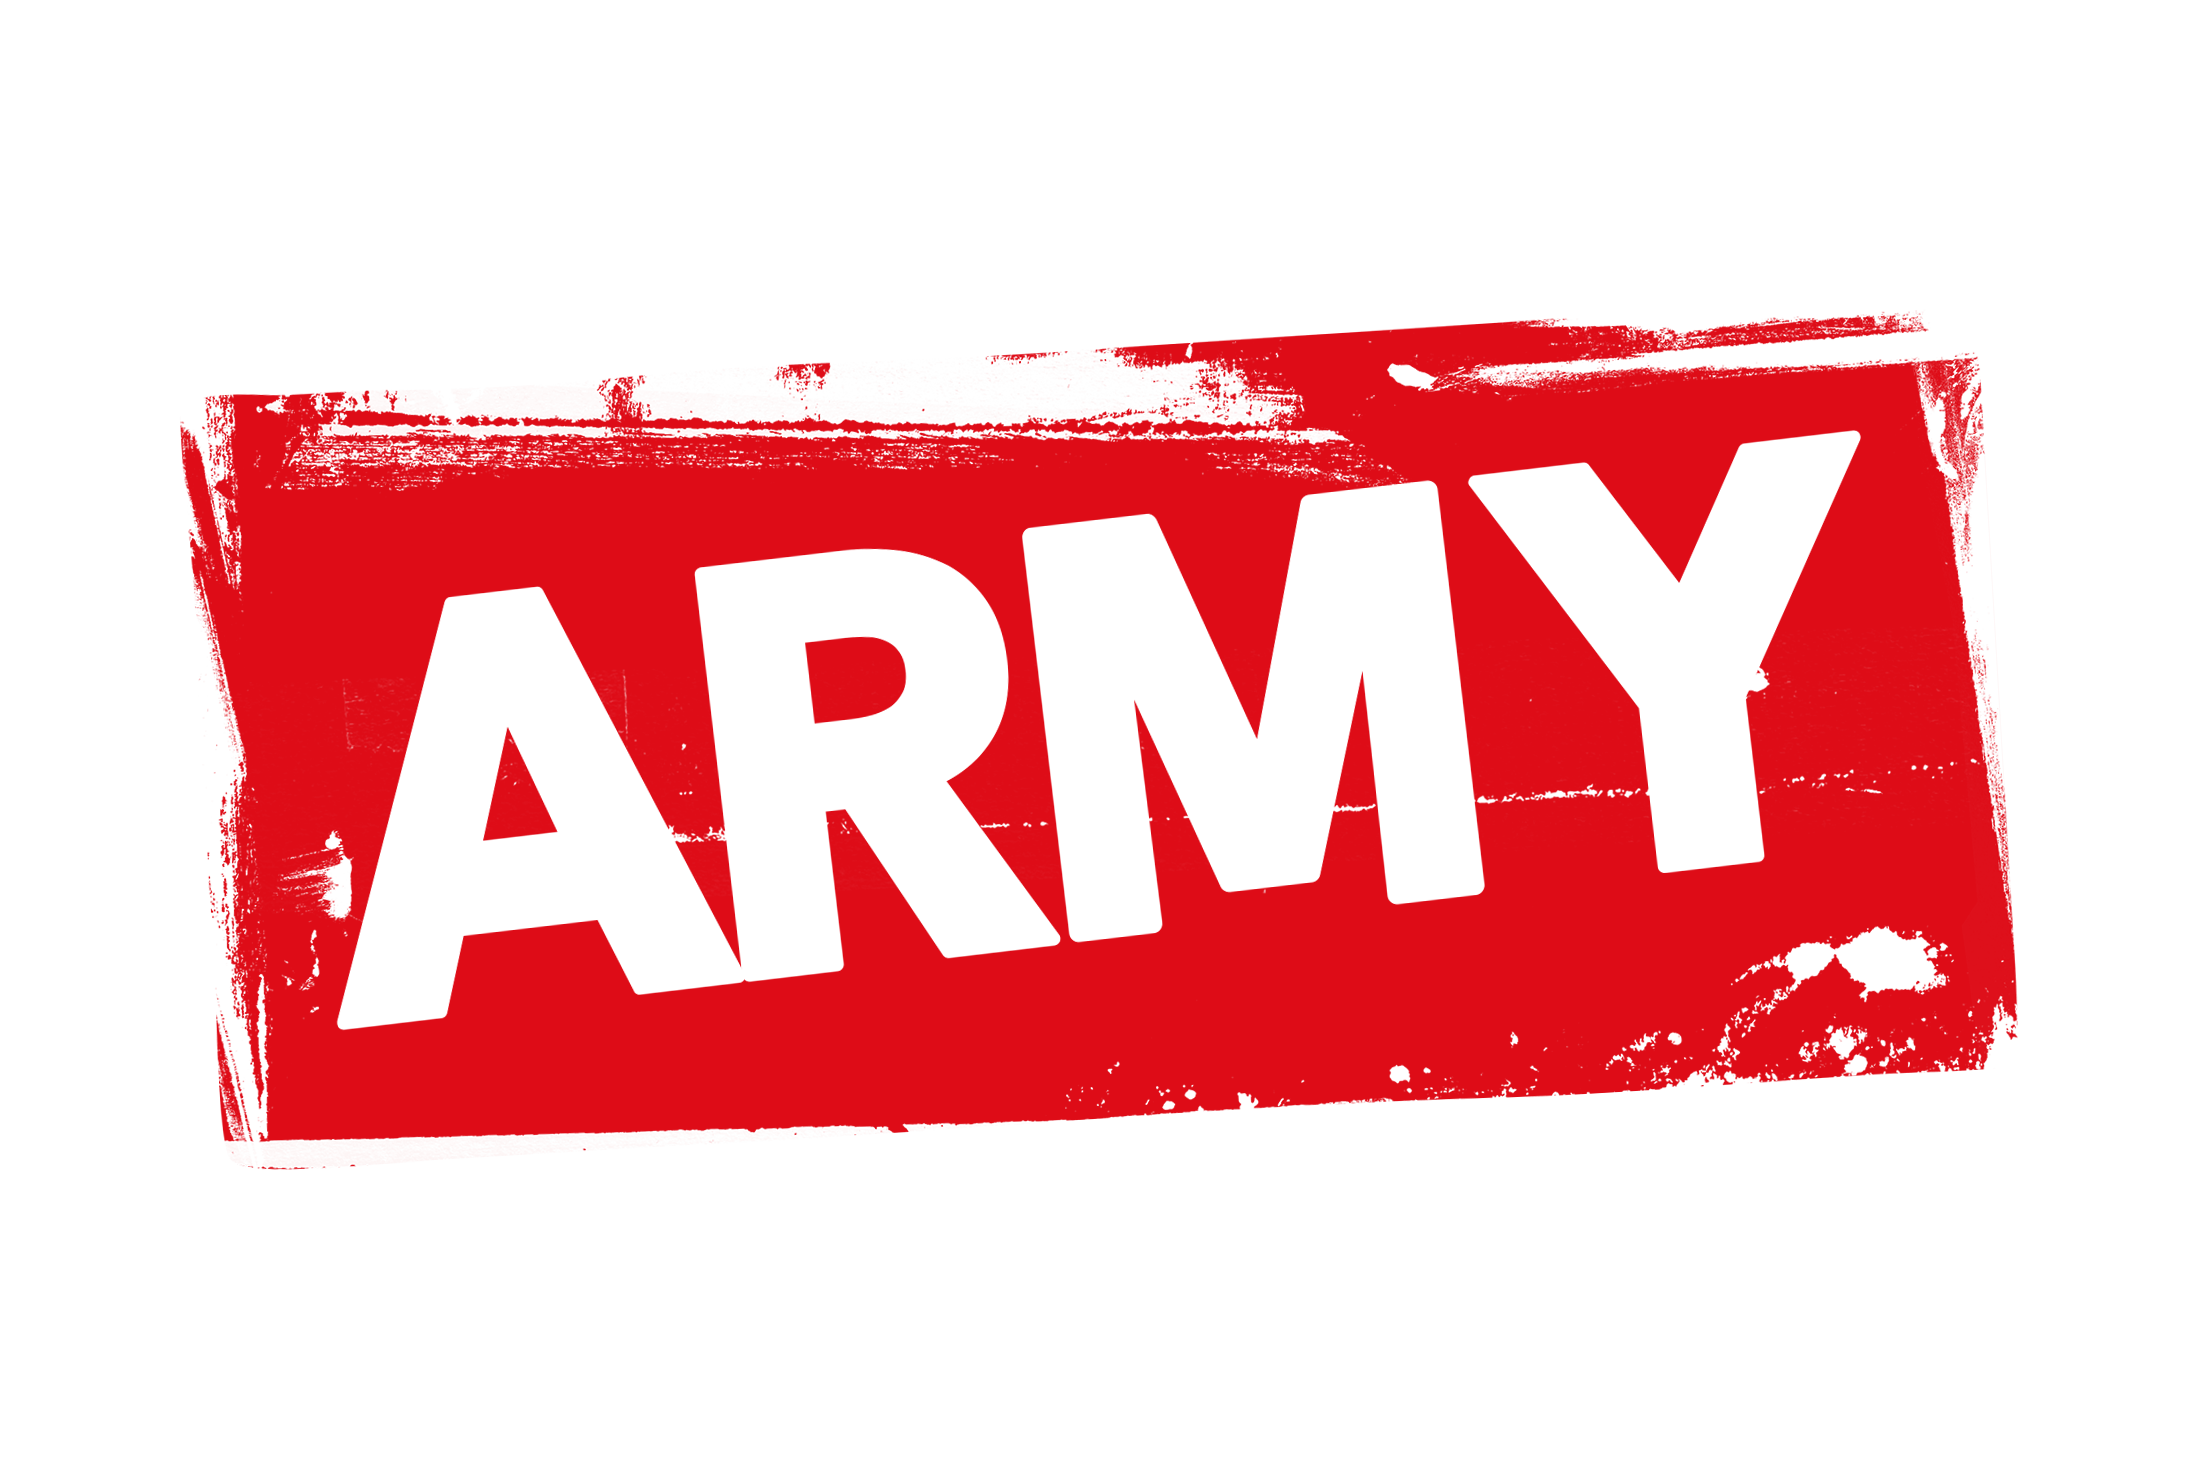 Grunge army label PSD